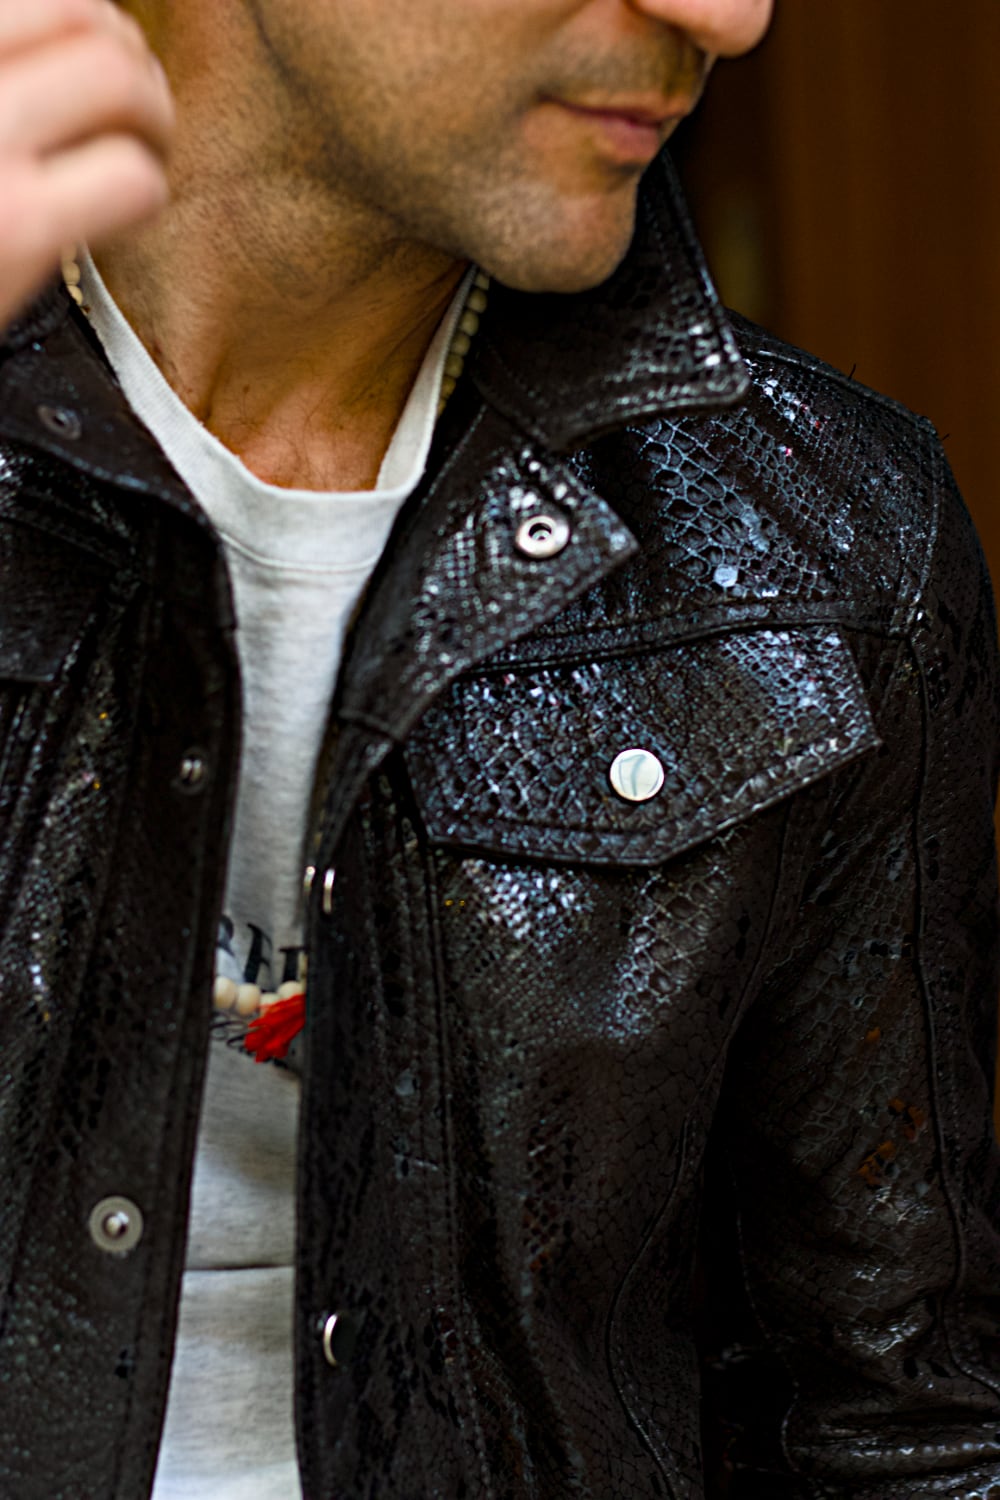 SNK Shiny Snake embossed Trucker Jacket in Black Leather -